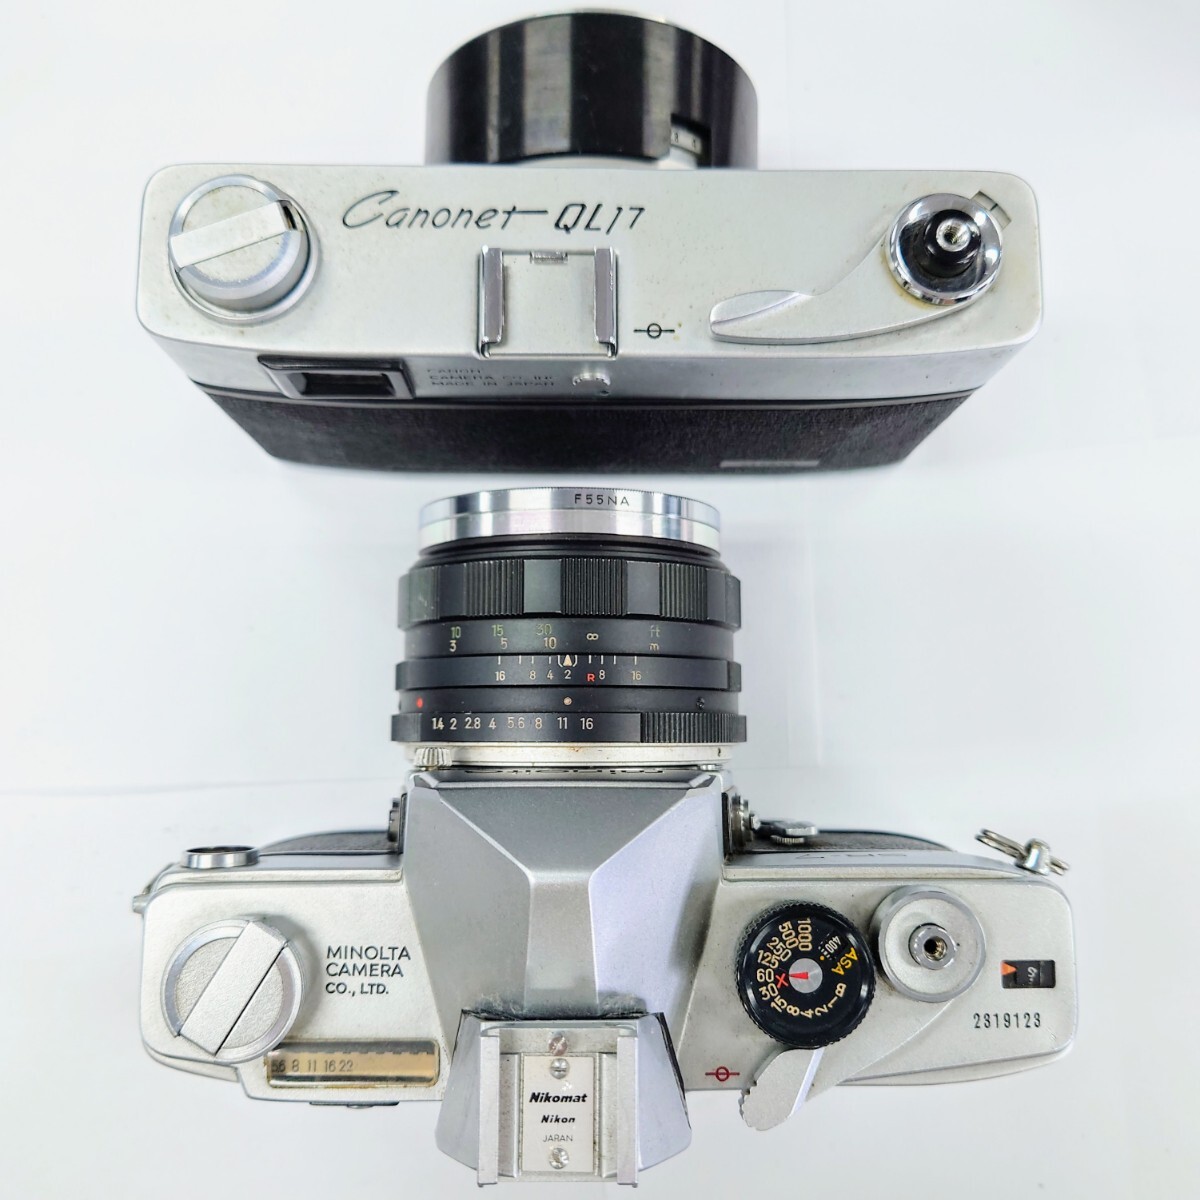 I1026 film camera summarize Canon Canonet QL17 LENS SE 45mm 1:1.7 MINOLTA SR-7 PF 1:1.4 f=58mm Canon used junk with translation 